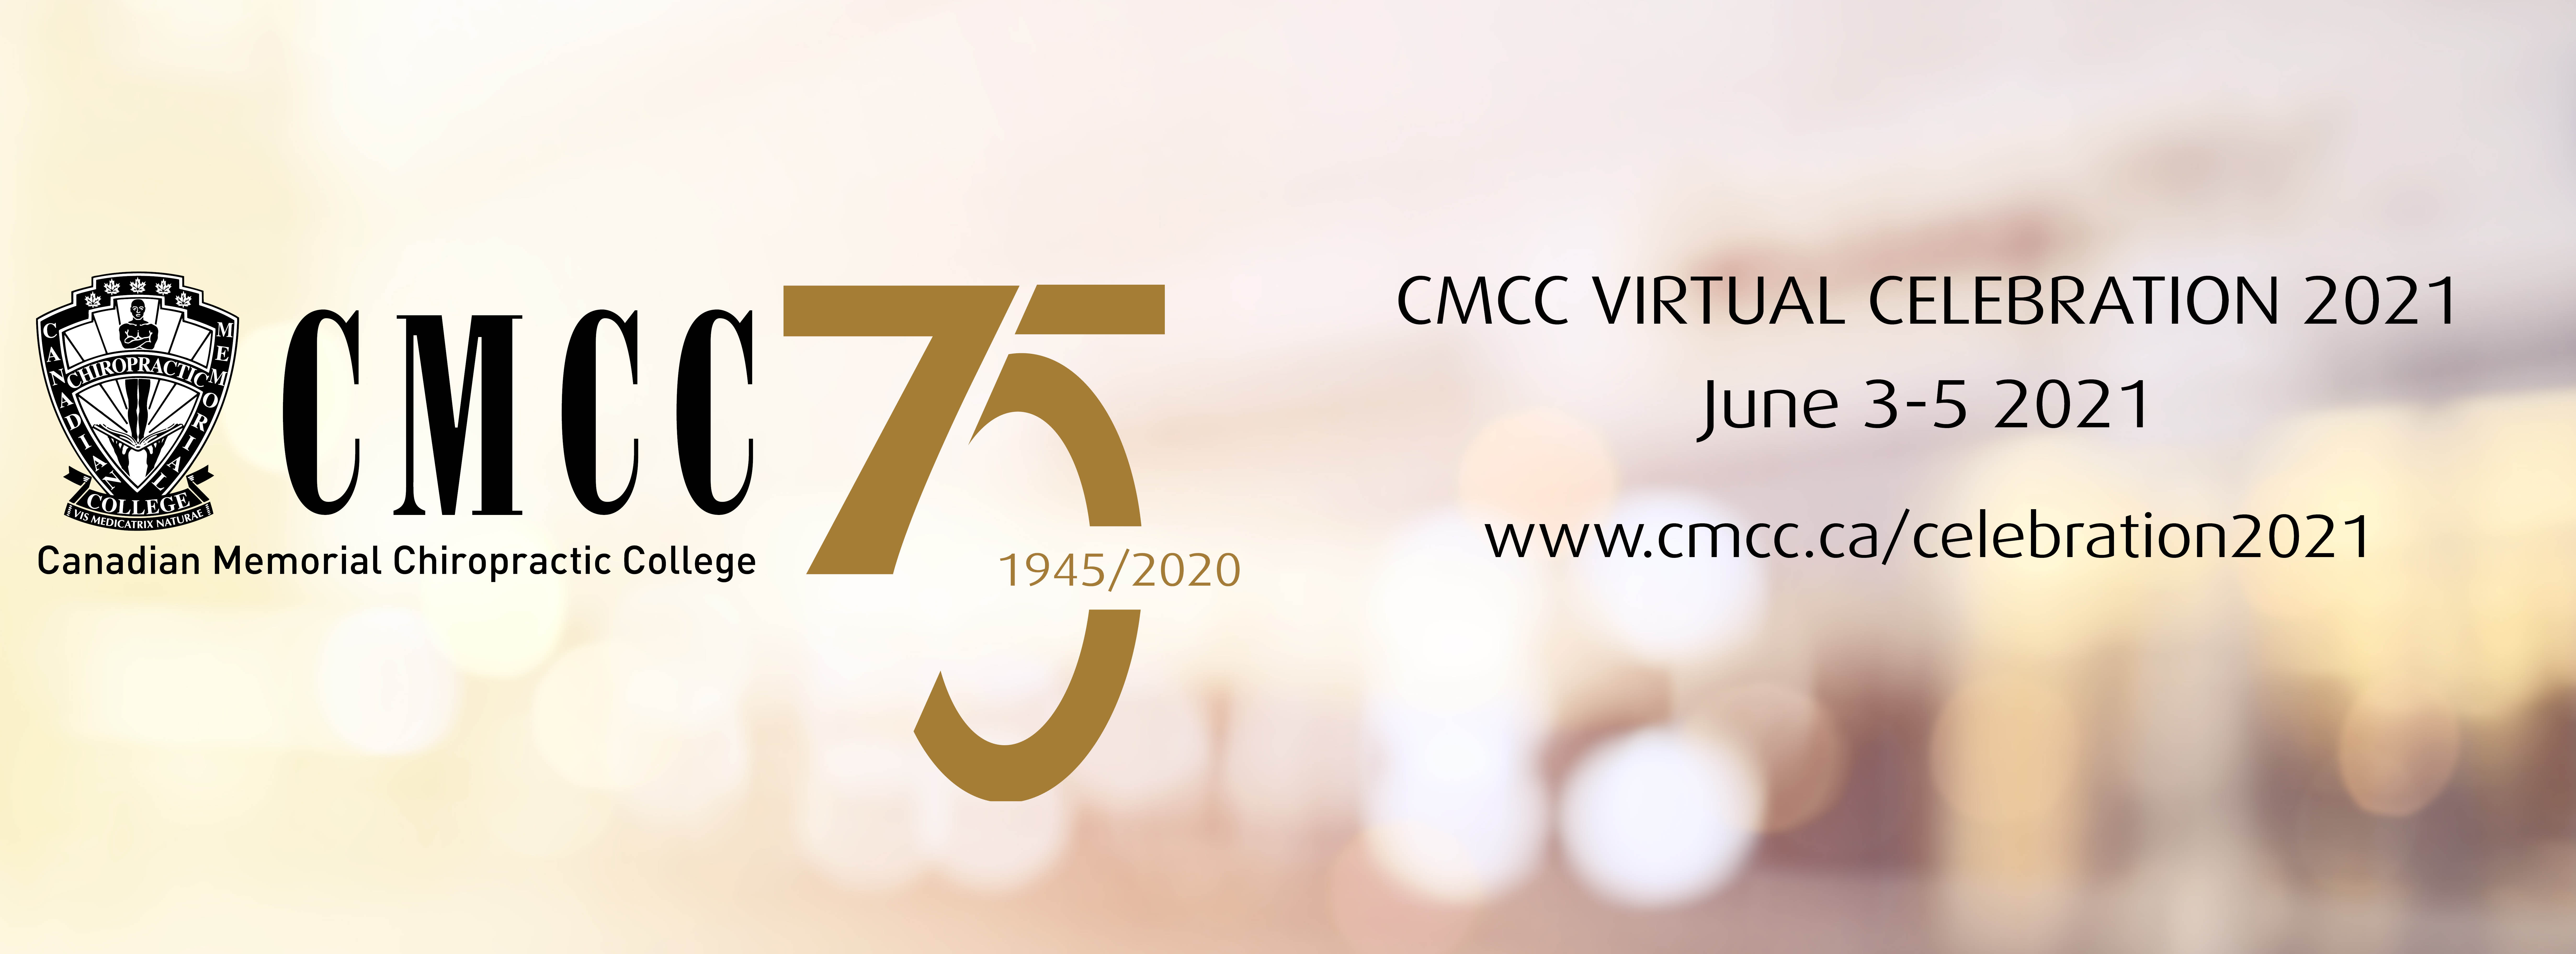 CMCC Celebration 2021 banner